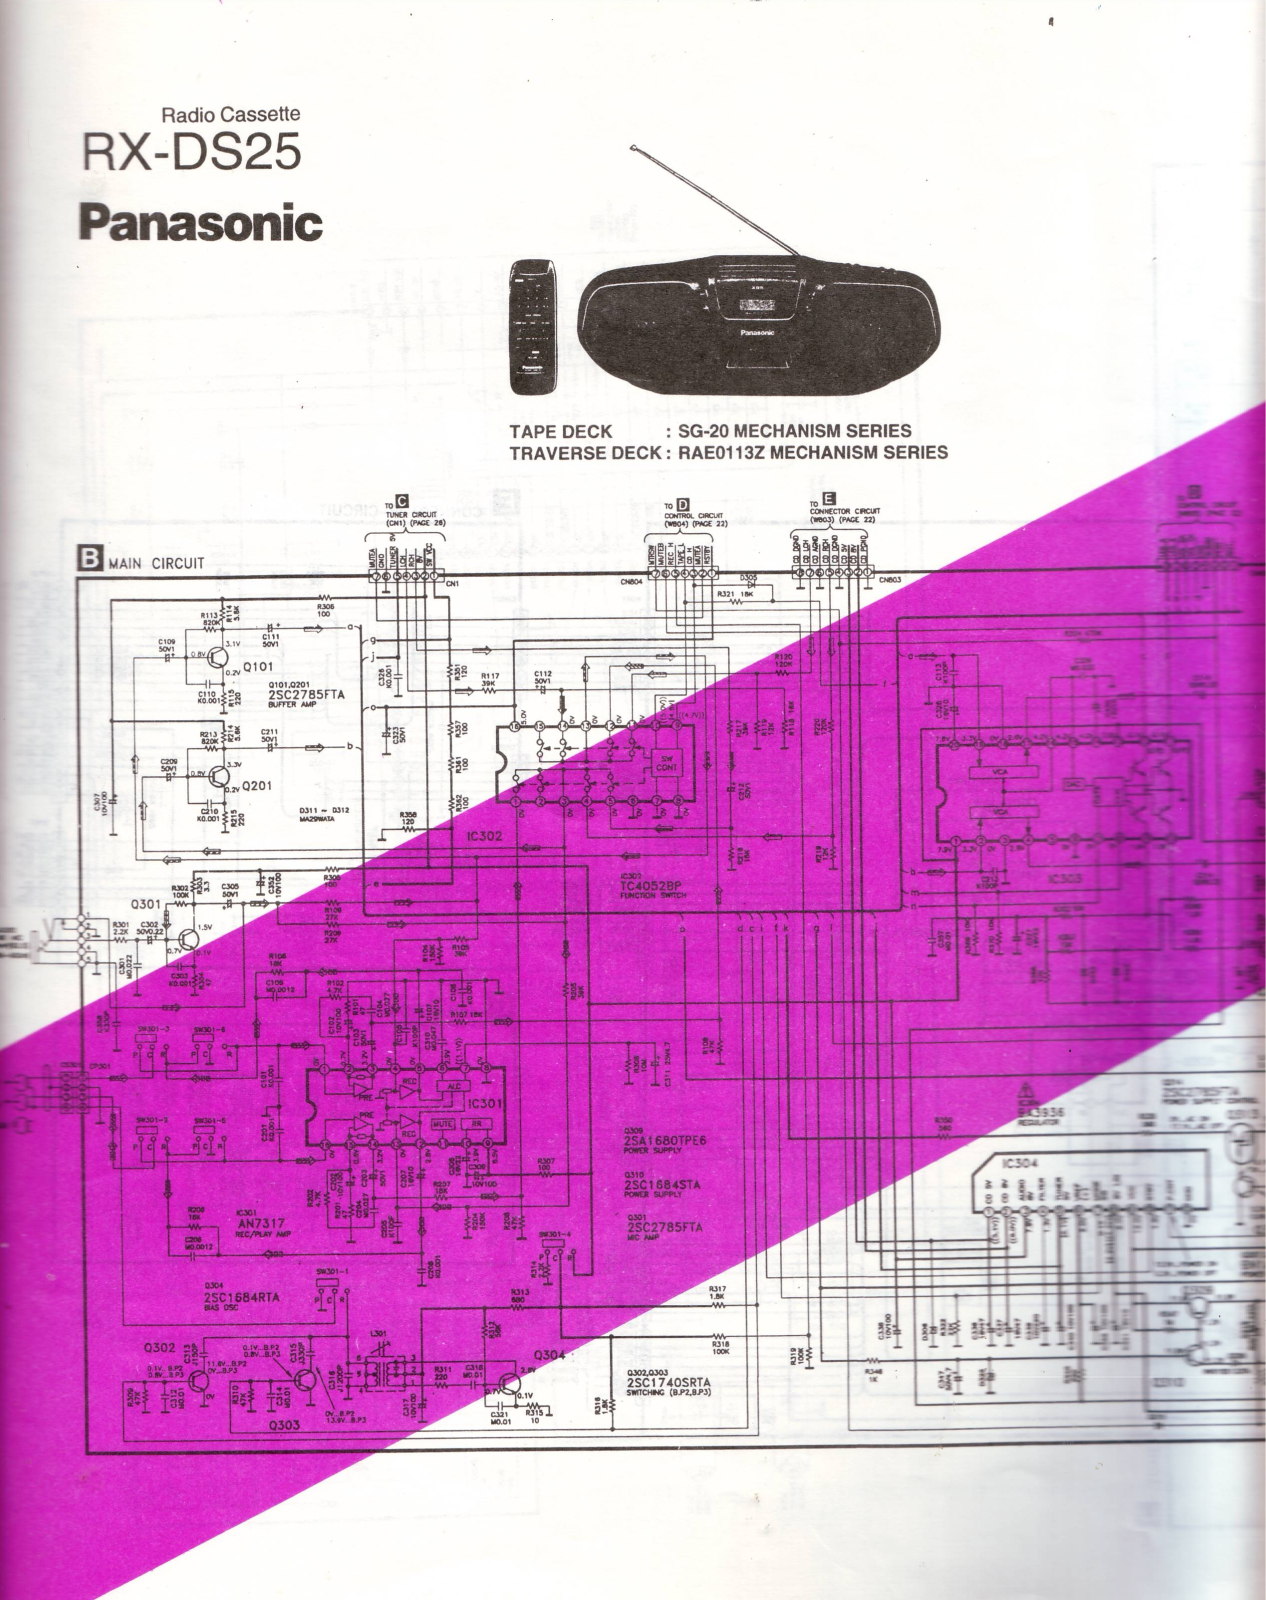 Panasonic RXDS-25 Schematic